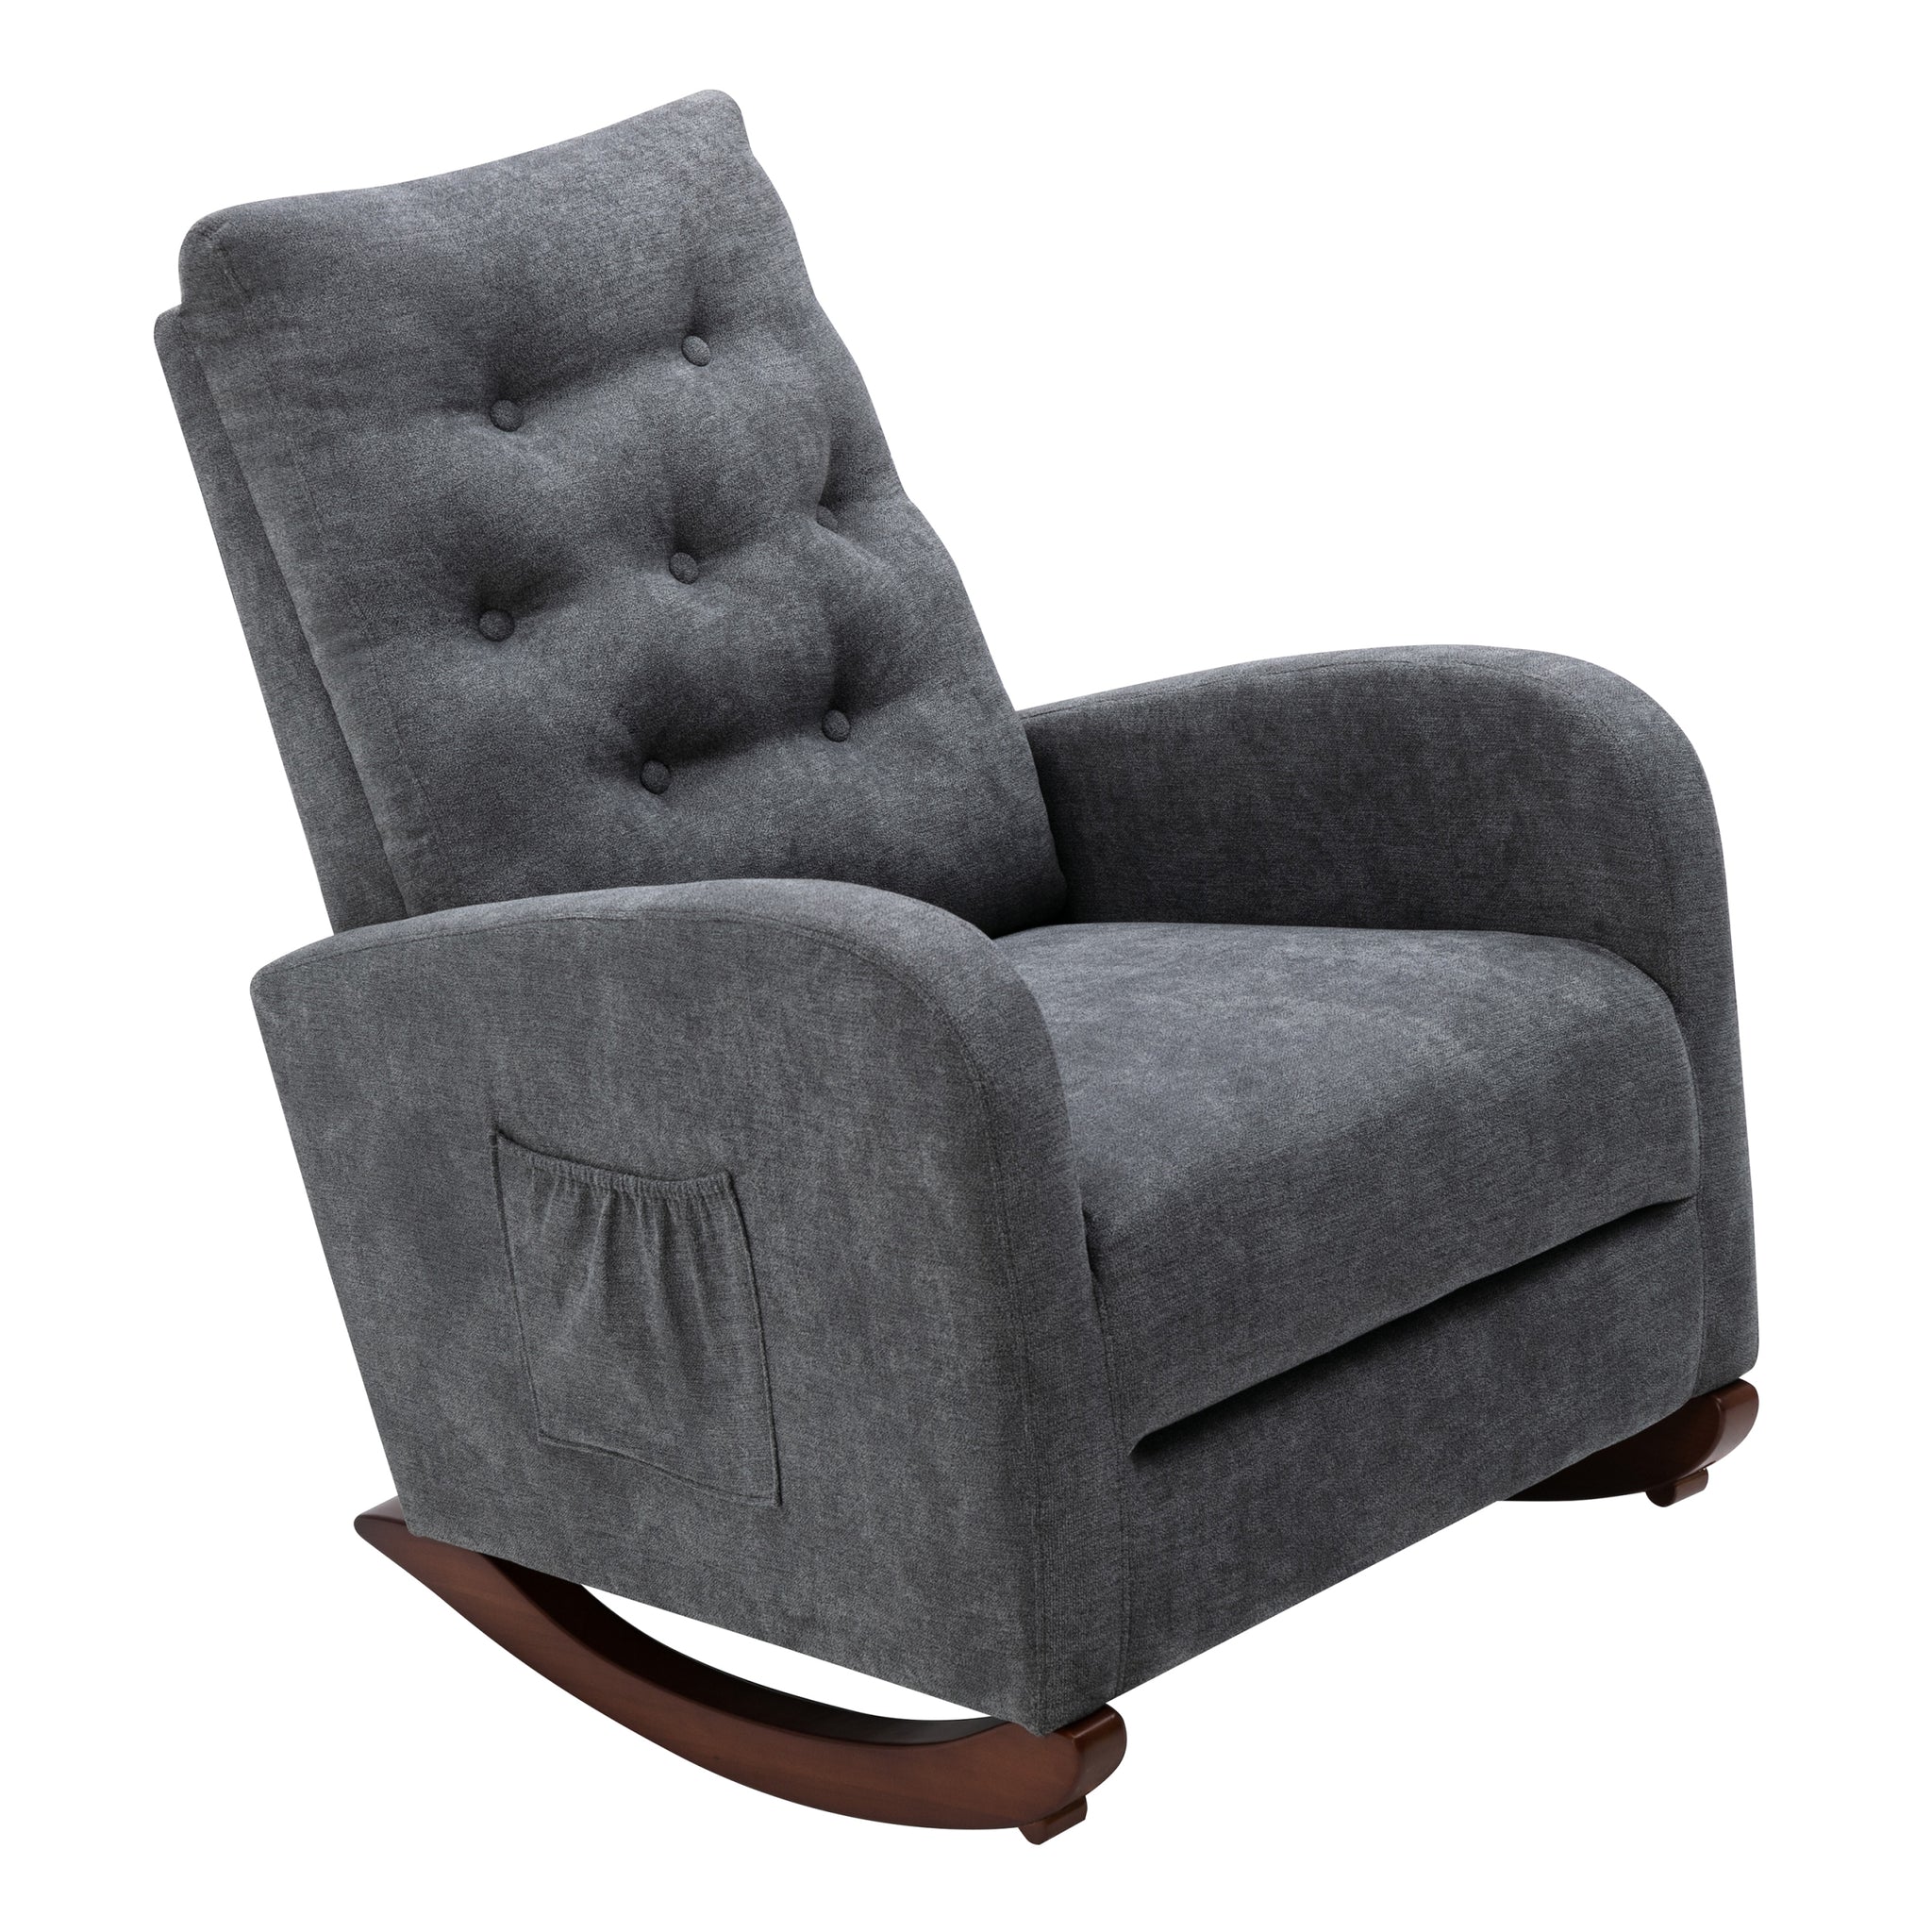 Baby Room High Back Rocking Chair Nursery Chair dark gray-cotton